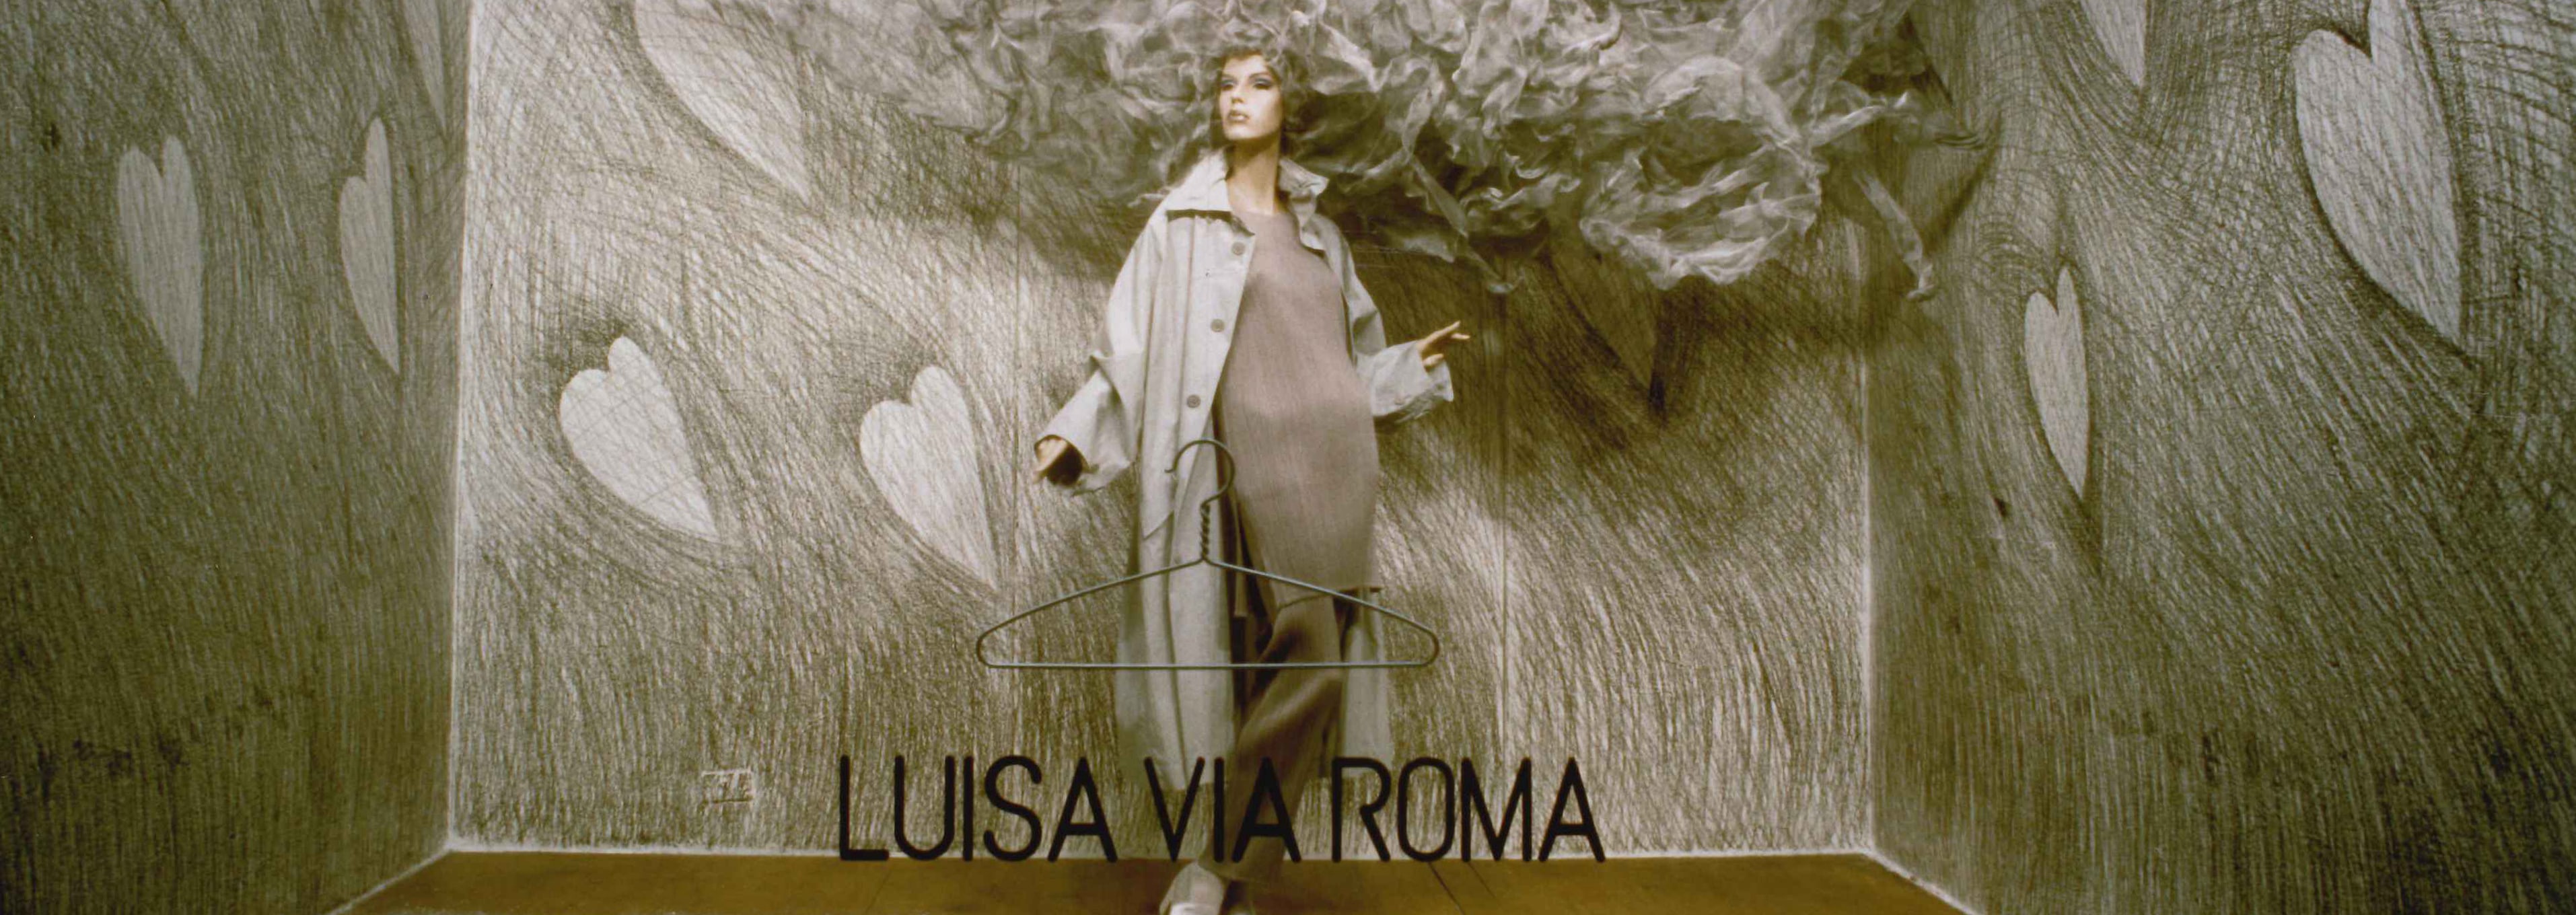 LVR 인터뷰: LuisaViaRoma의 디스플레이 디자이너 Lorenzo Gemma